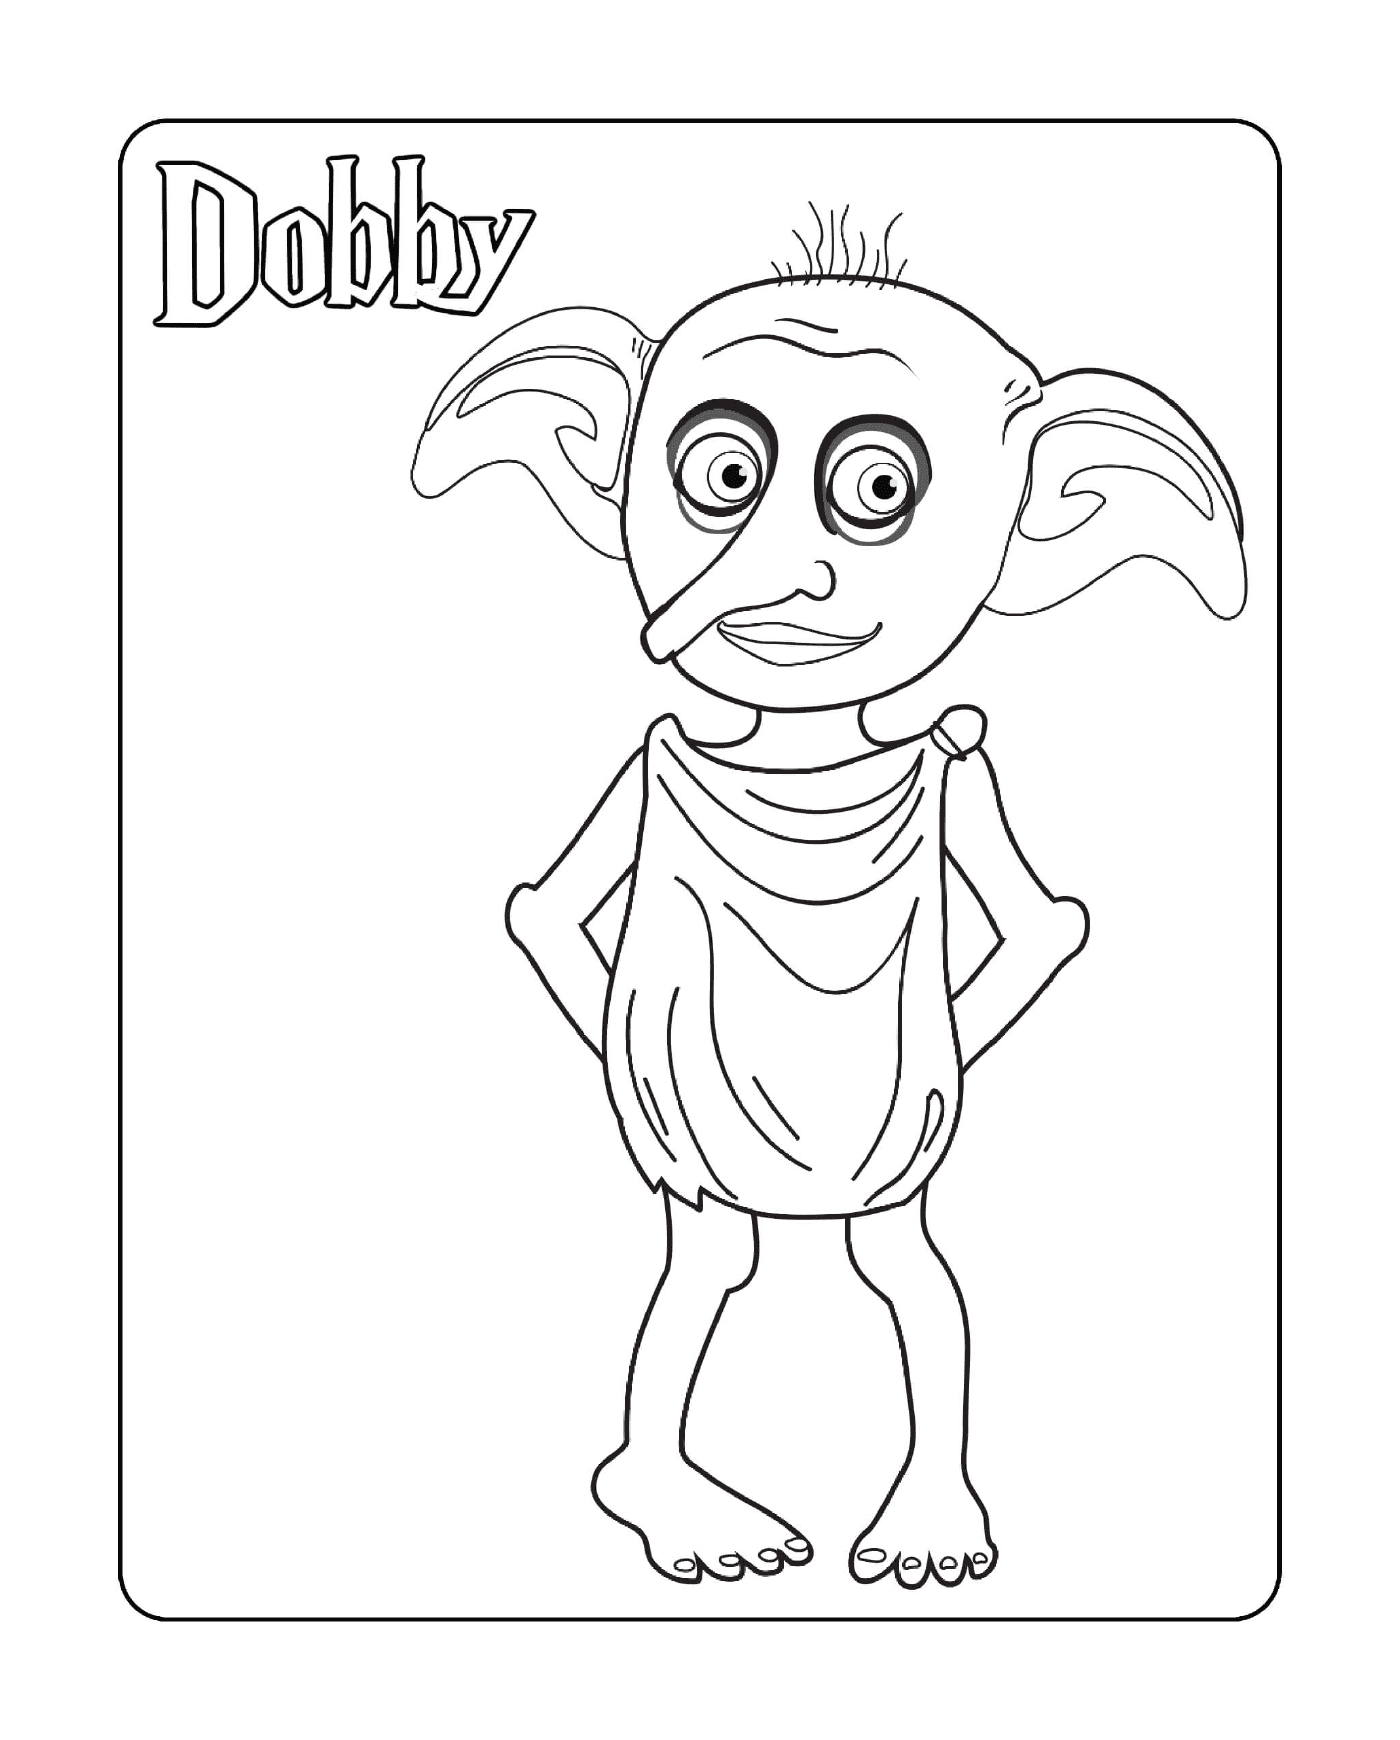   Adulte de Dobby de Harry Potter 